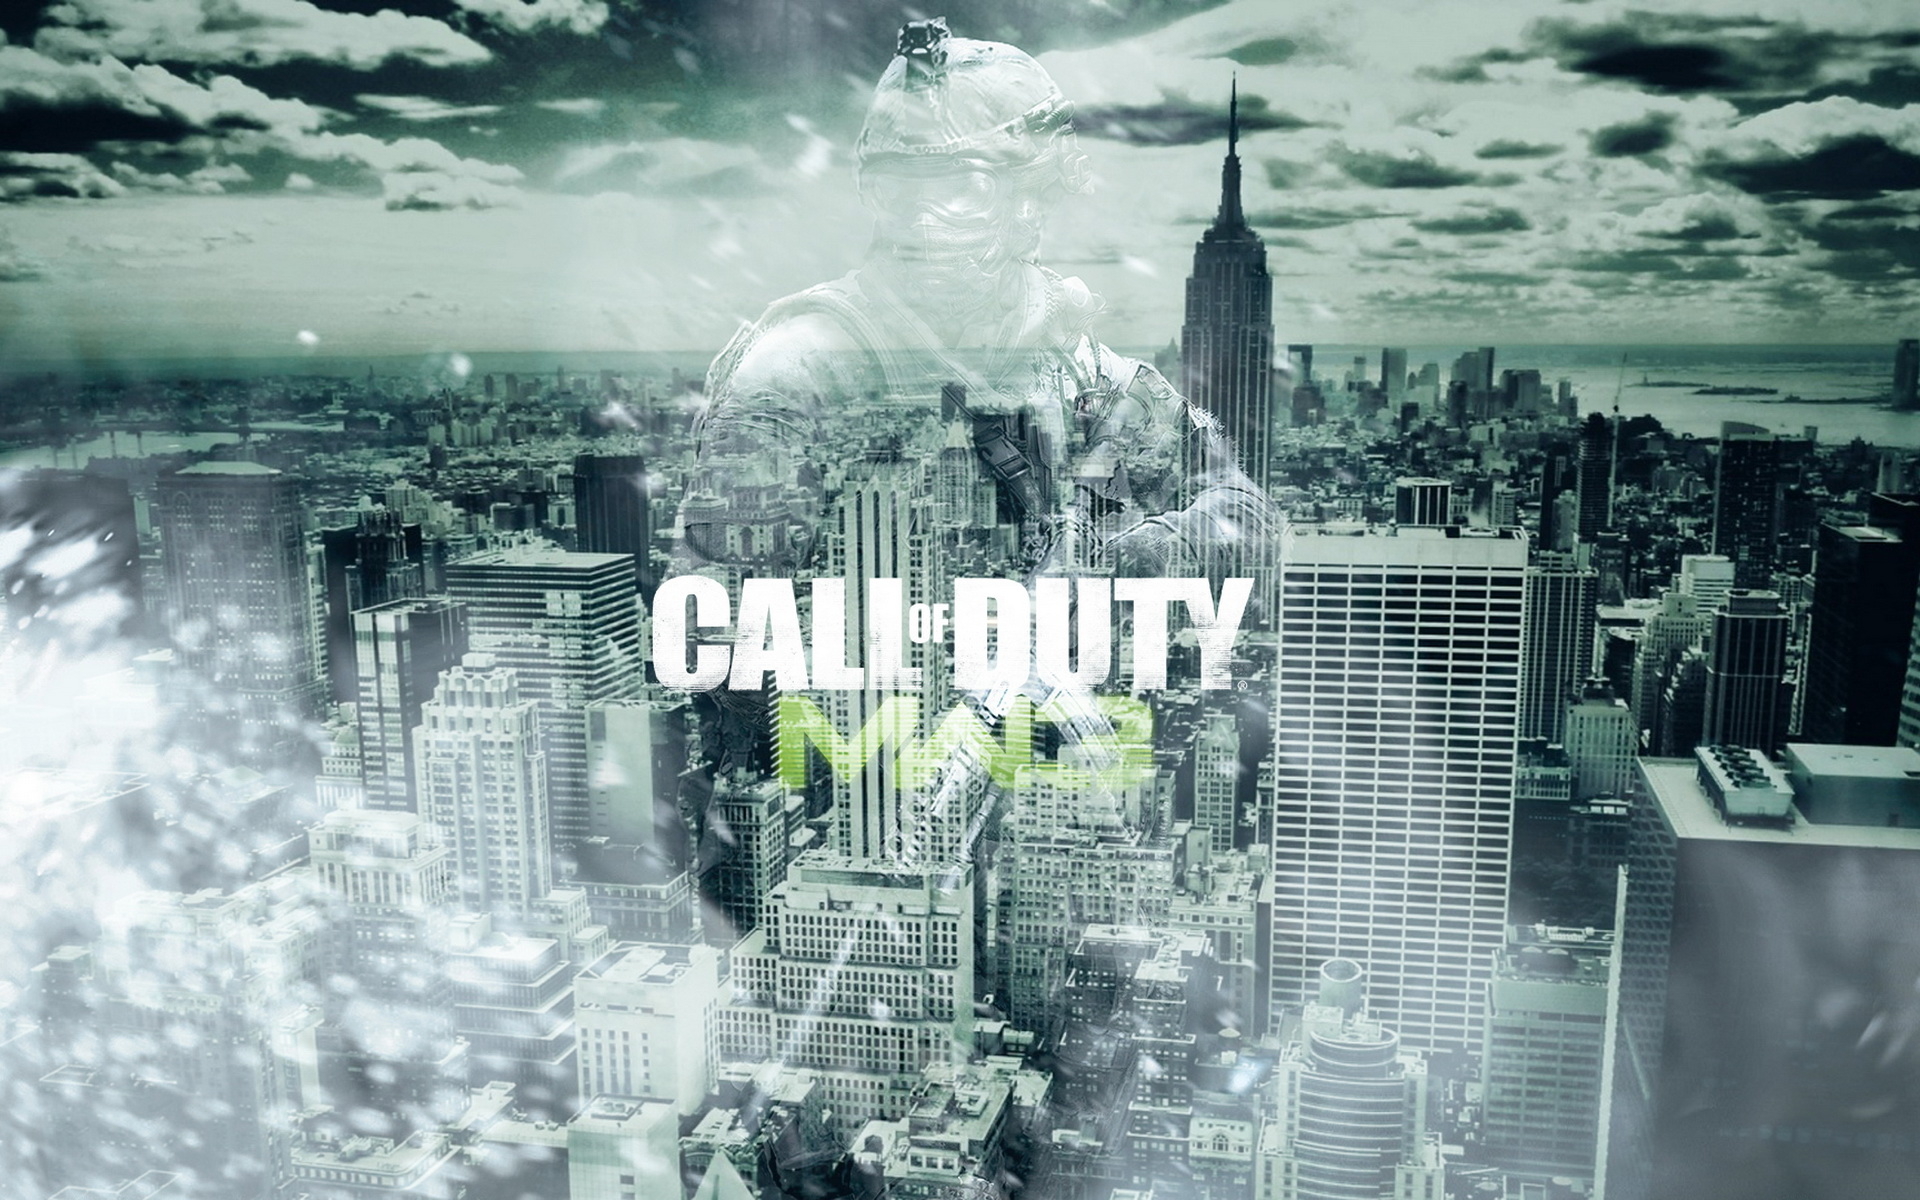 Video Game Call of Duty: Modern Warfare 3 HD Wallpaper | Background Image